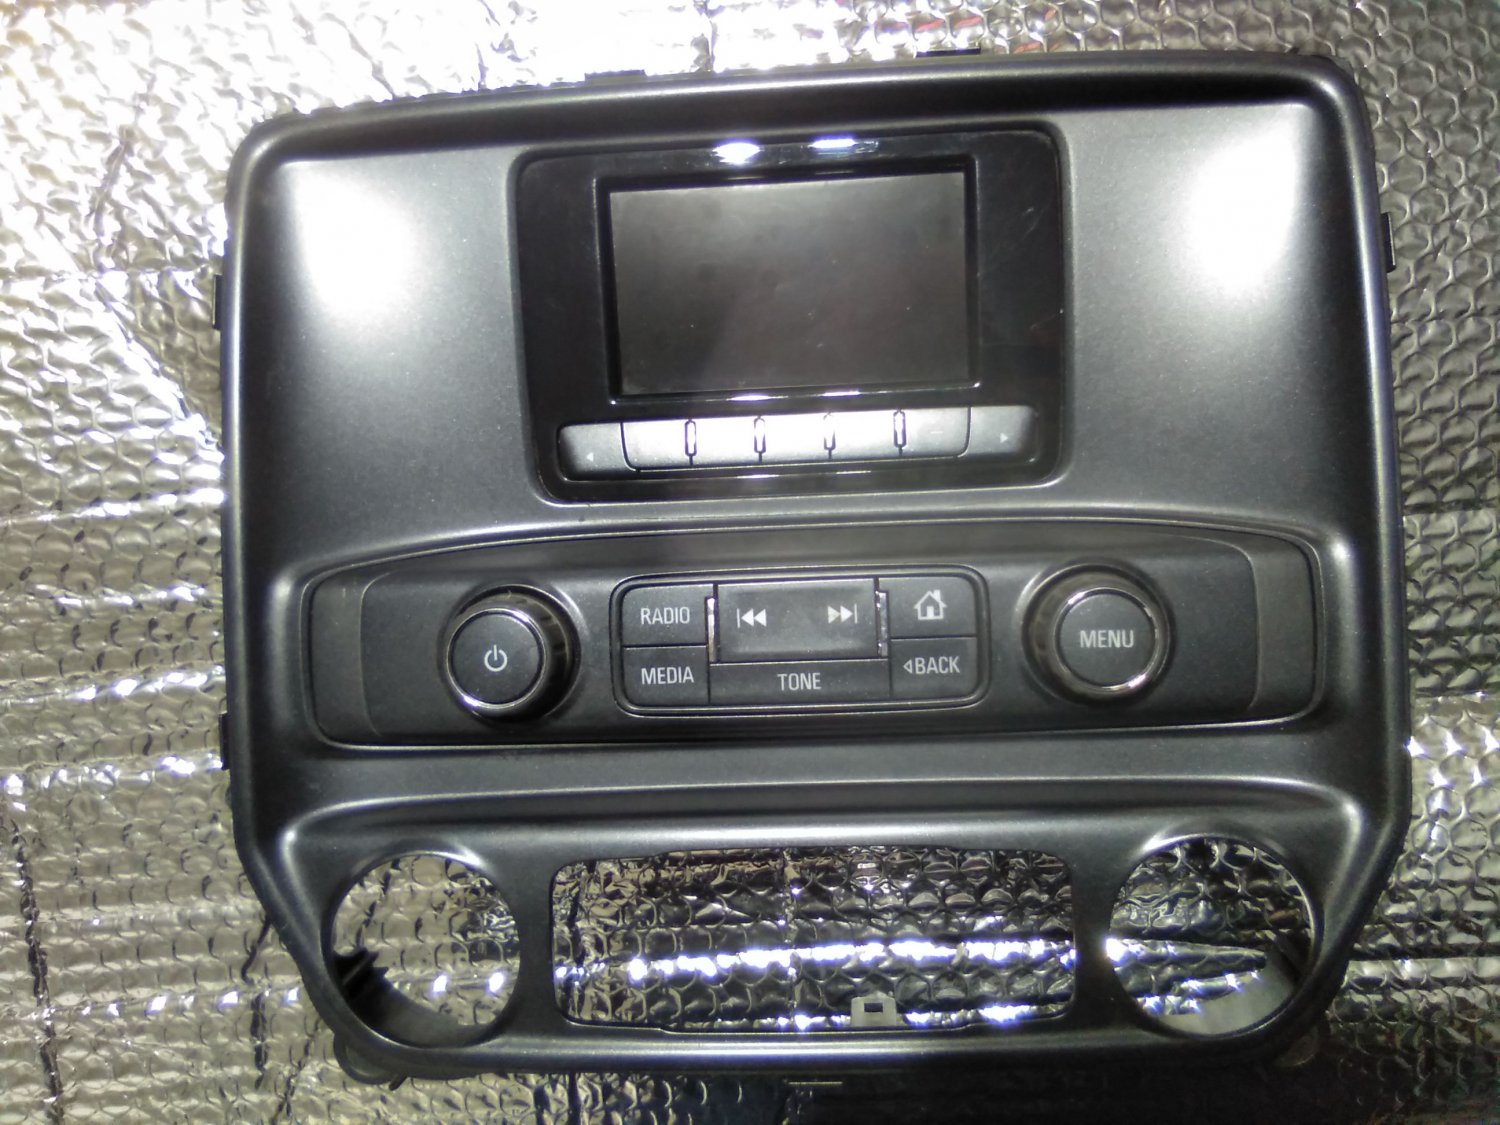 2015 CHEVROLET SILVERADO 1500 radio control panel w/screen OEM